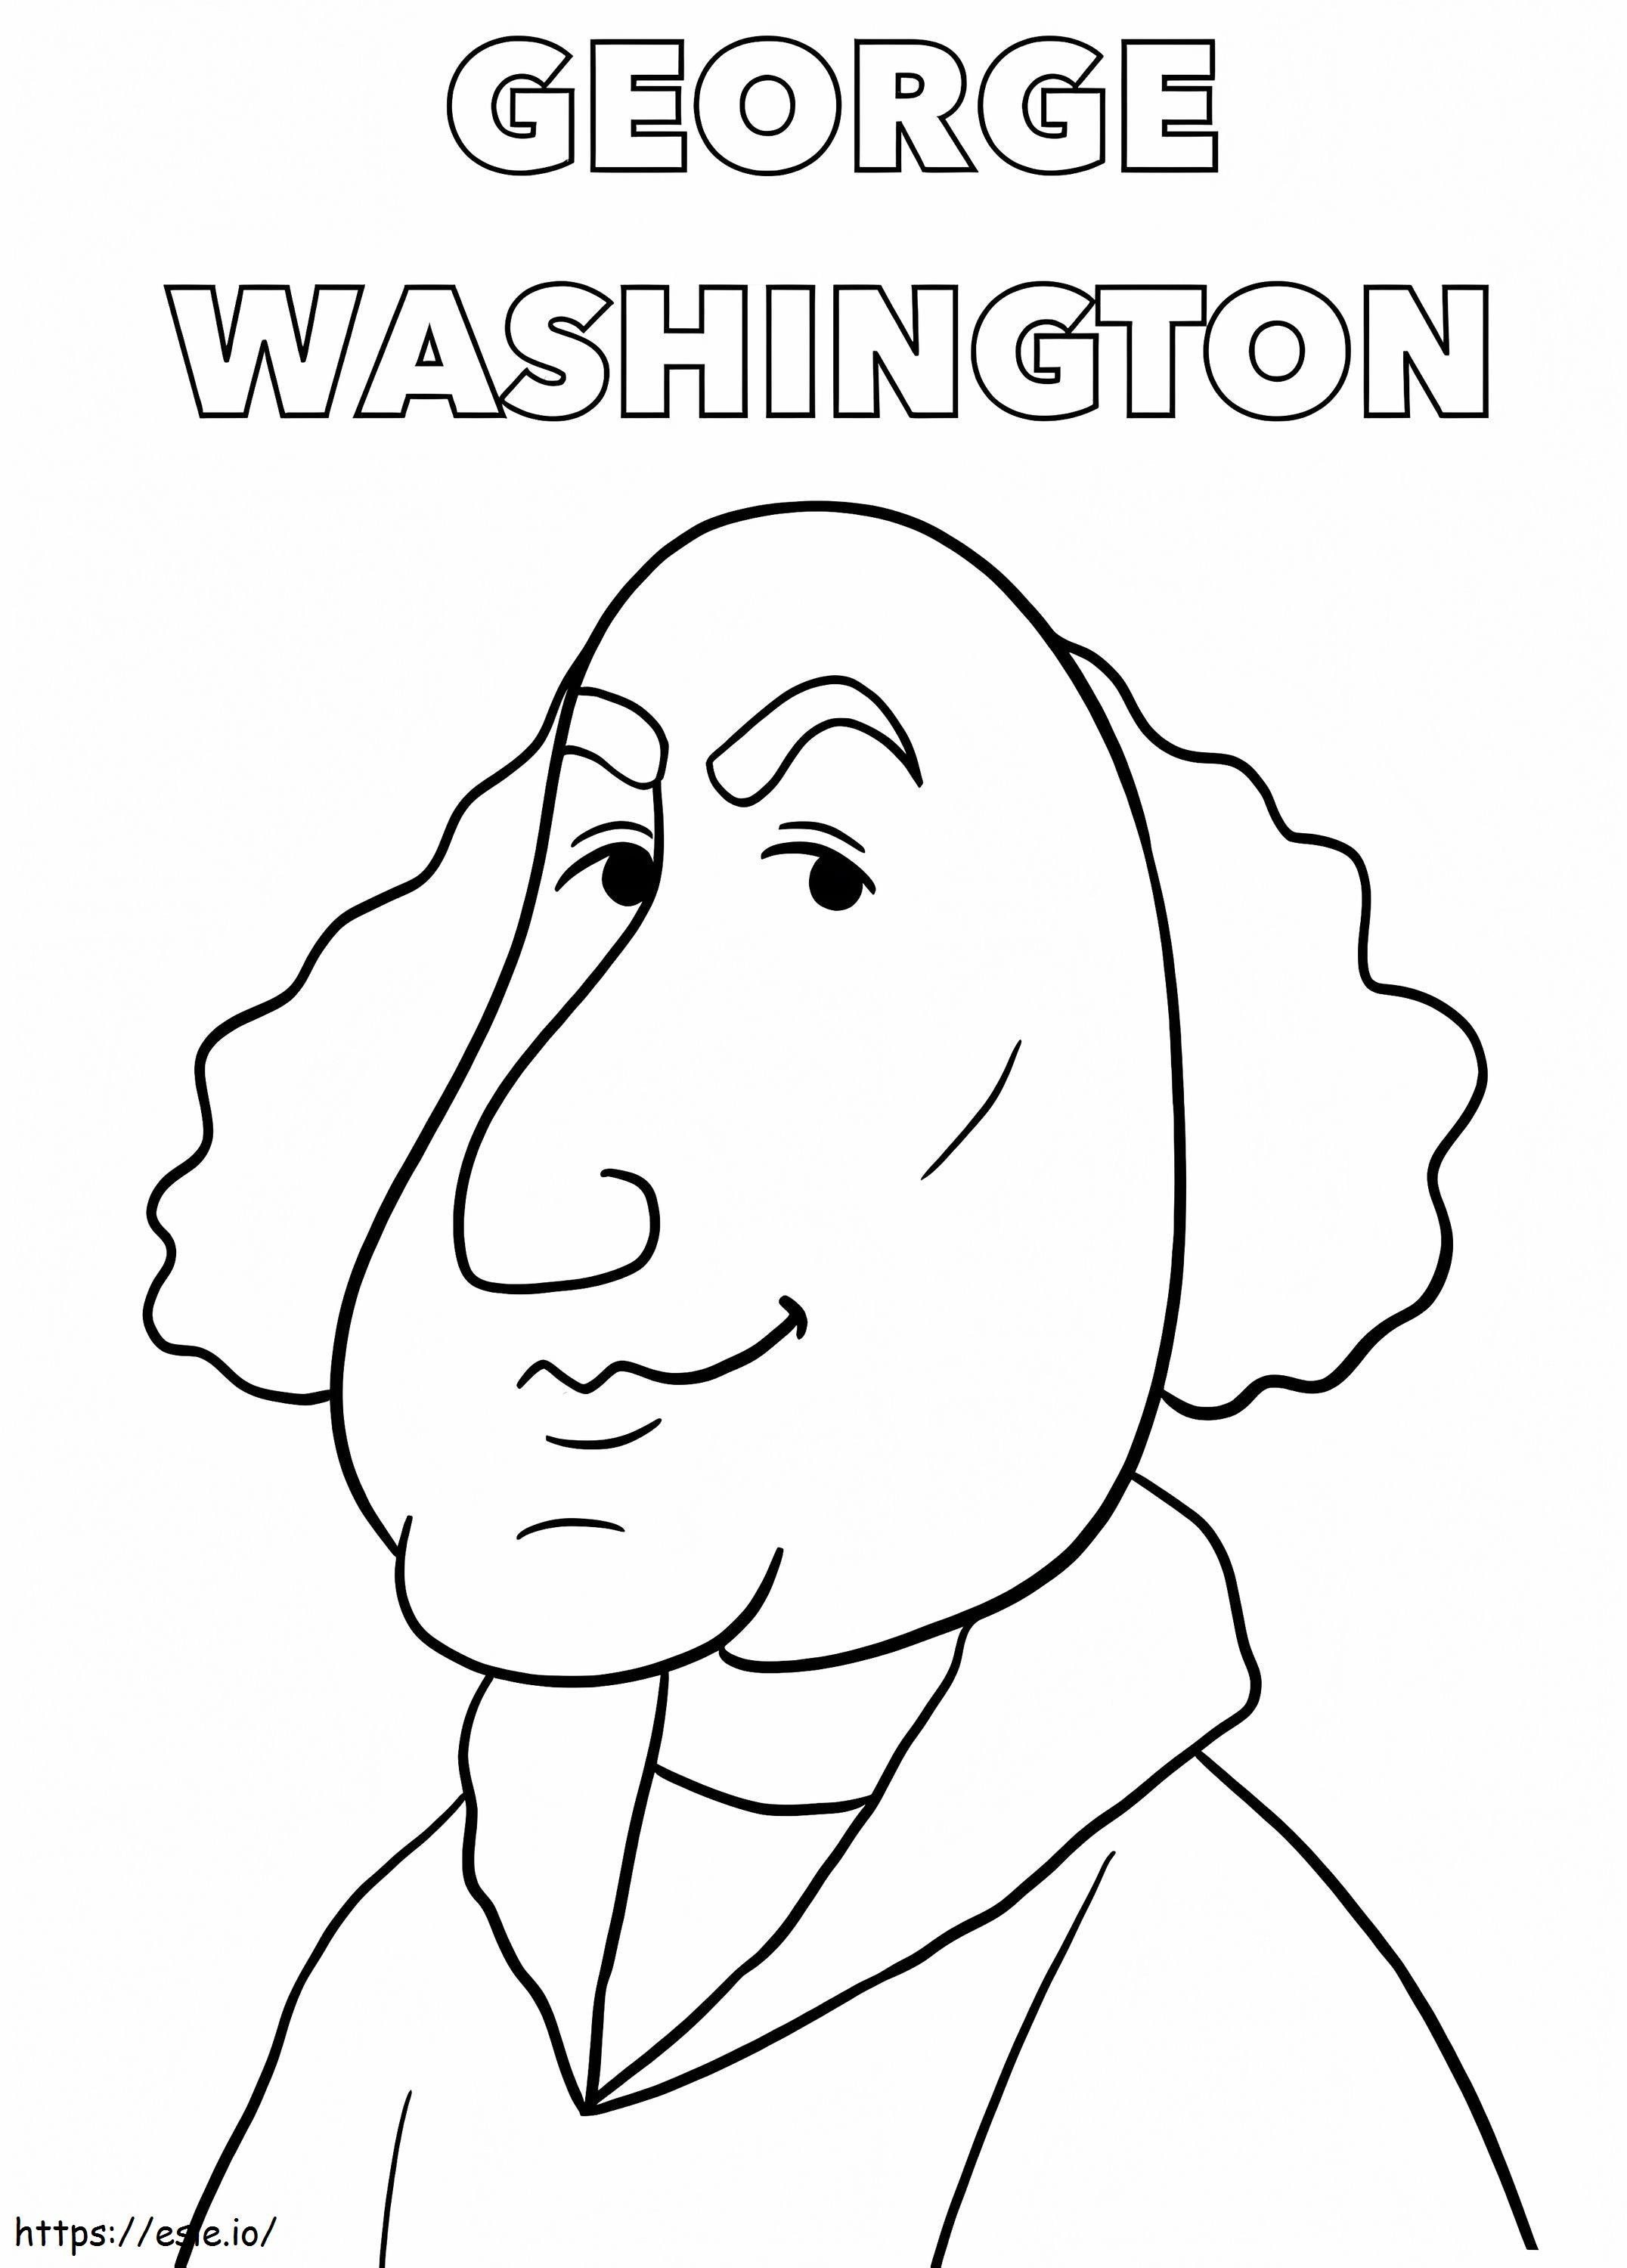 George Washington 22 coloring page